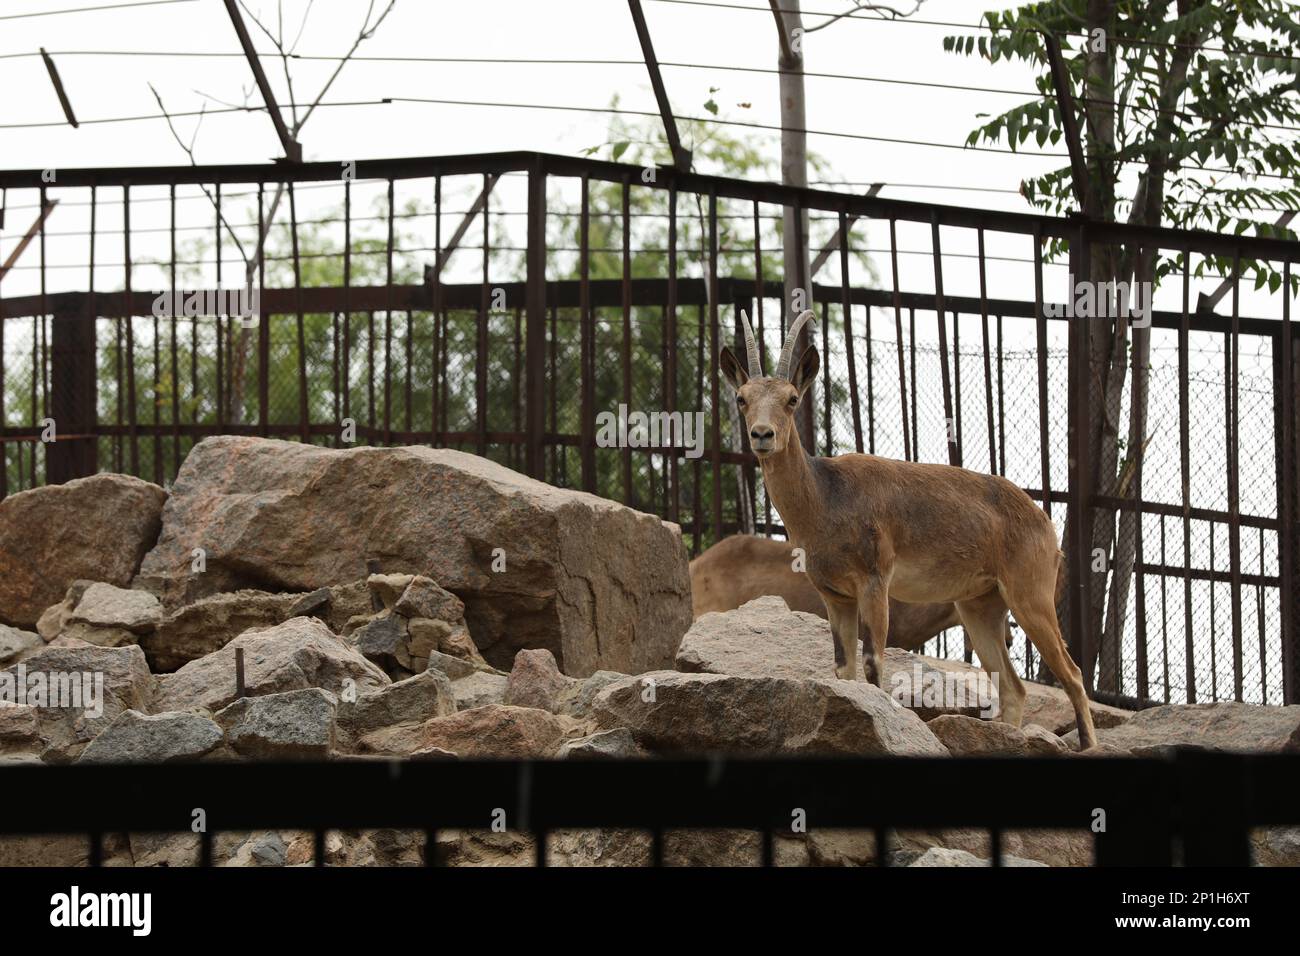 Beautiful ibex in zoo enclosure. Wild animal Stock Photo